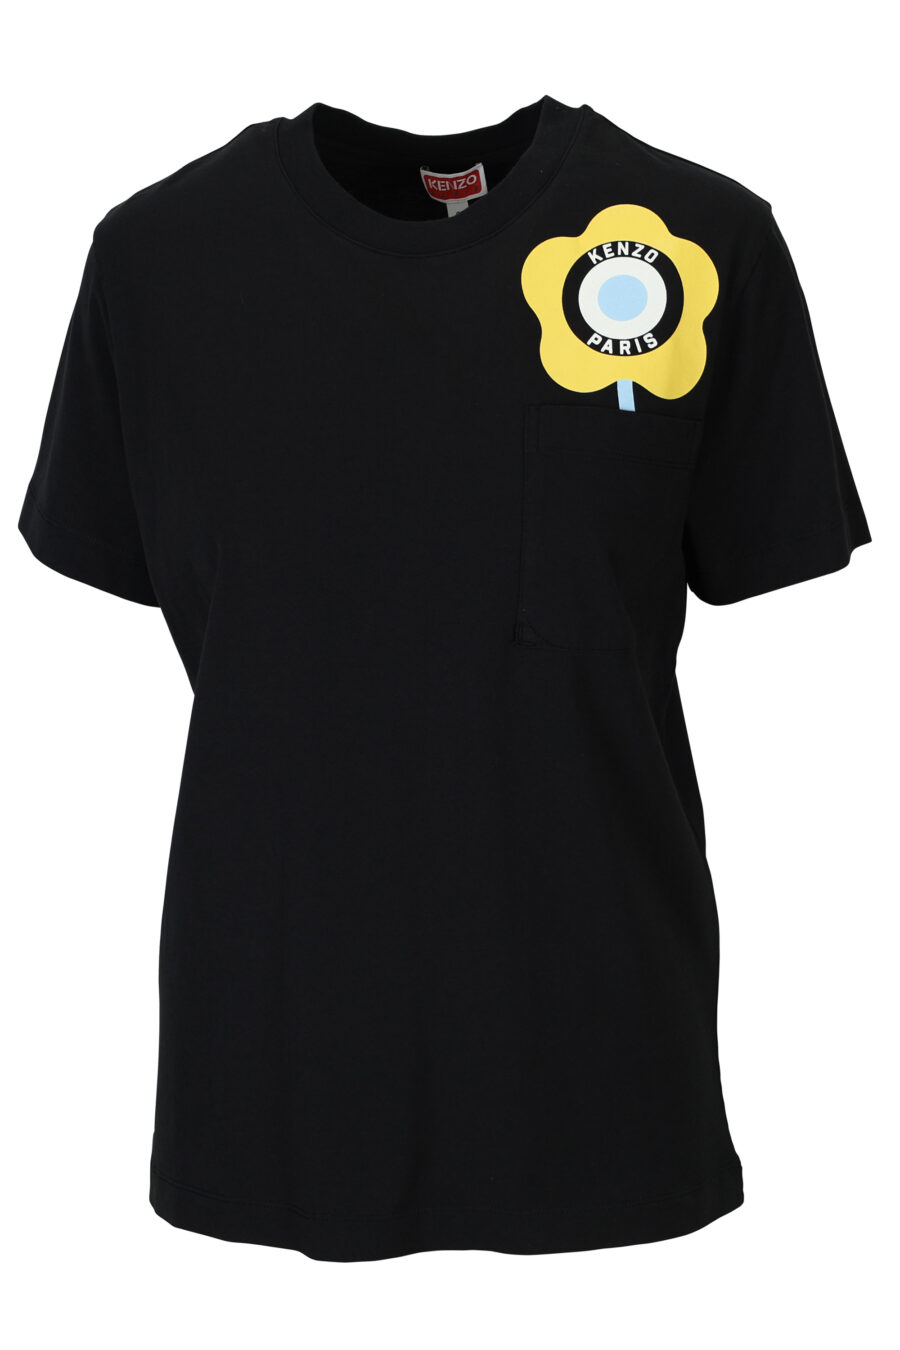 Schwarzes T-Shirt mit gelbem "kenzo target" Logo - 3612230510654